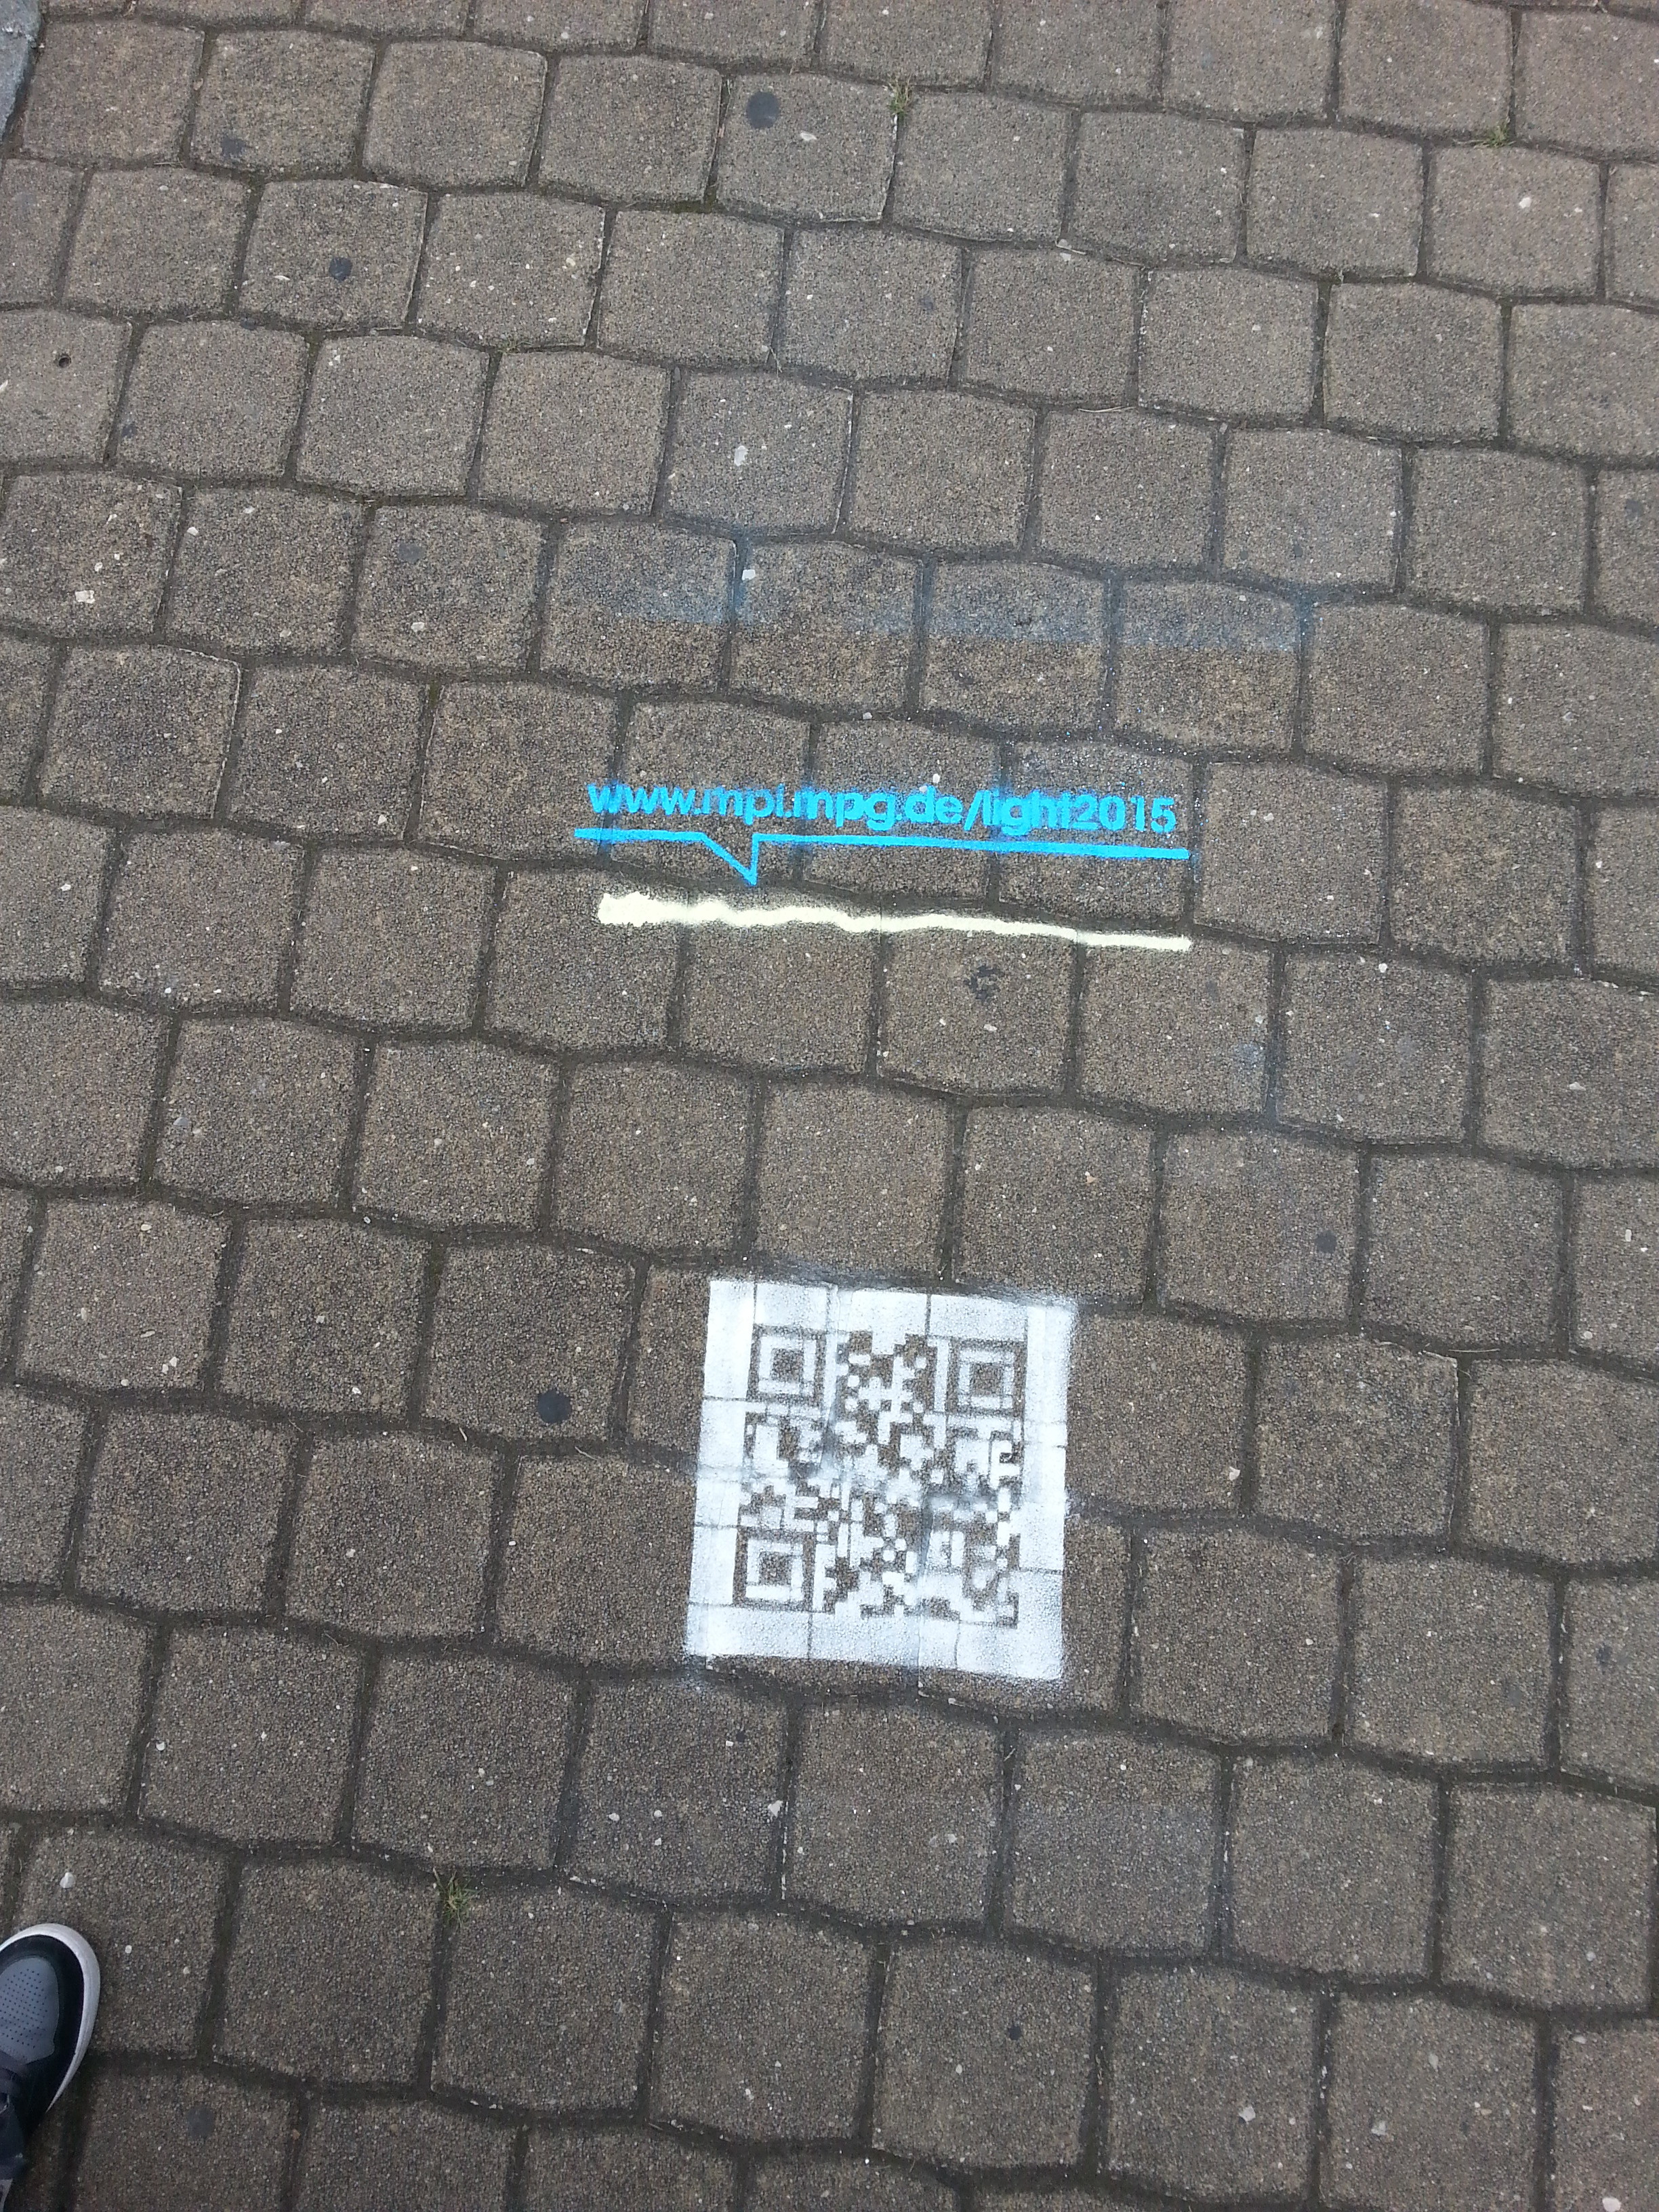 Per QR-Code gab es mehr Infos zur Wissenschaft "hinter" der Street-Art. (Bild: Bettina Heim)